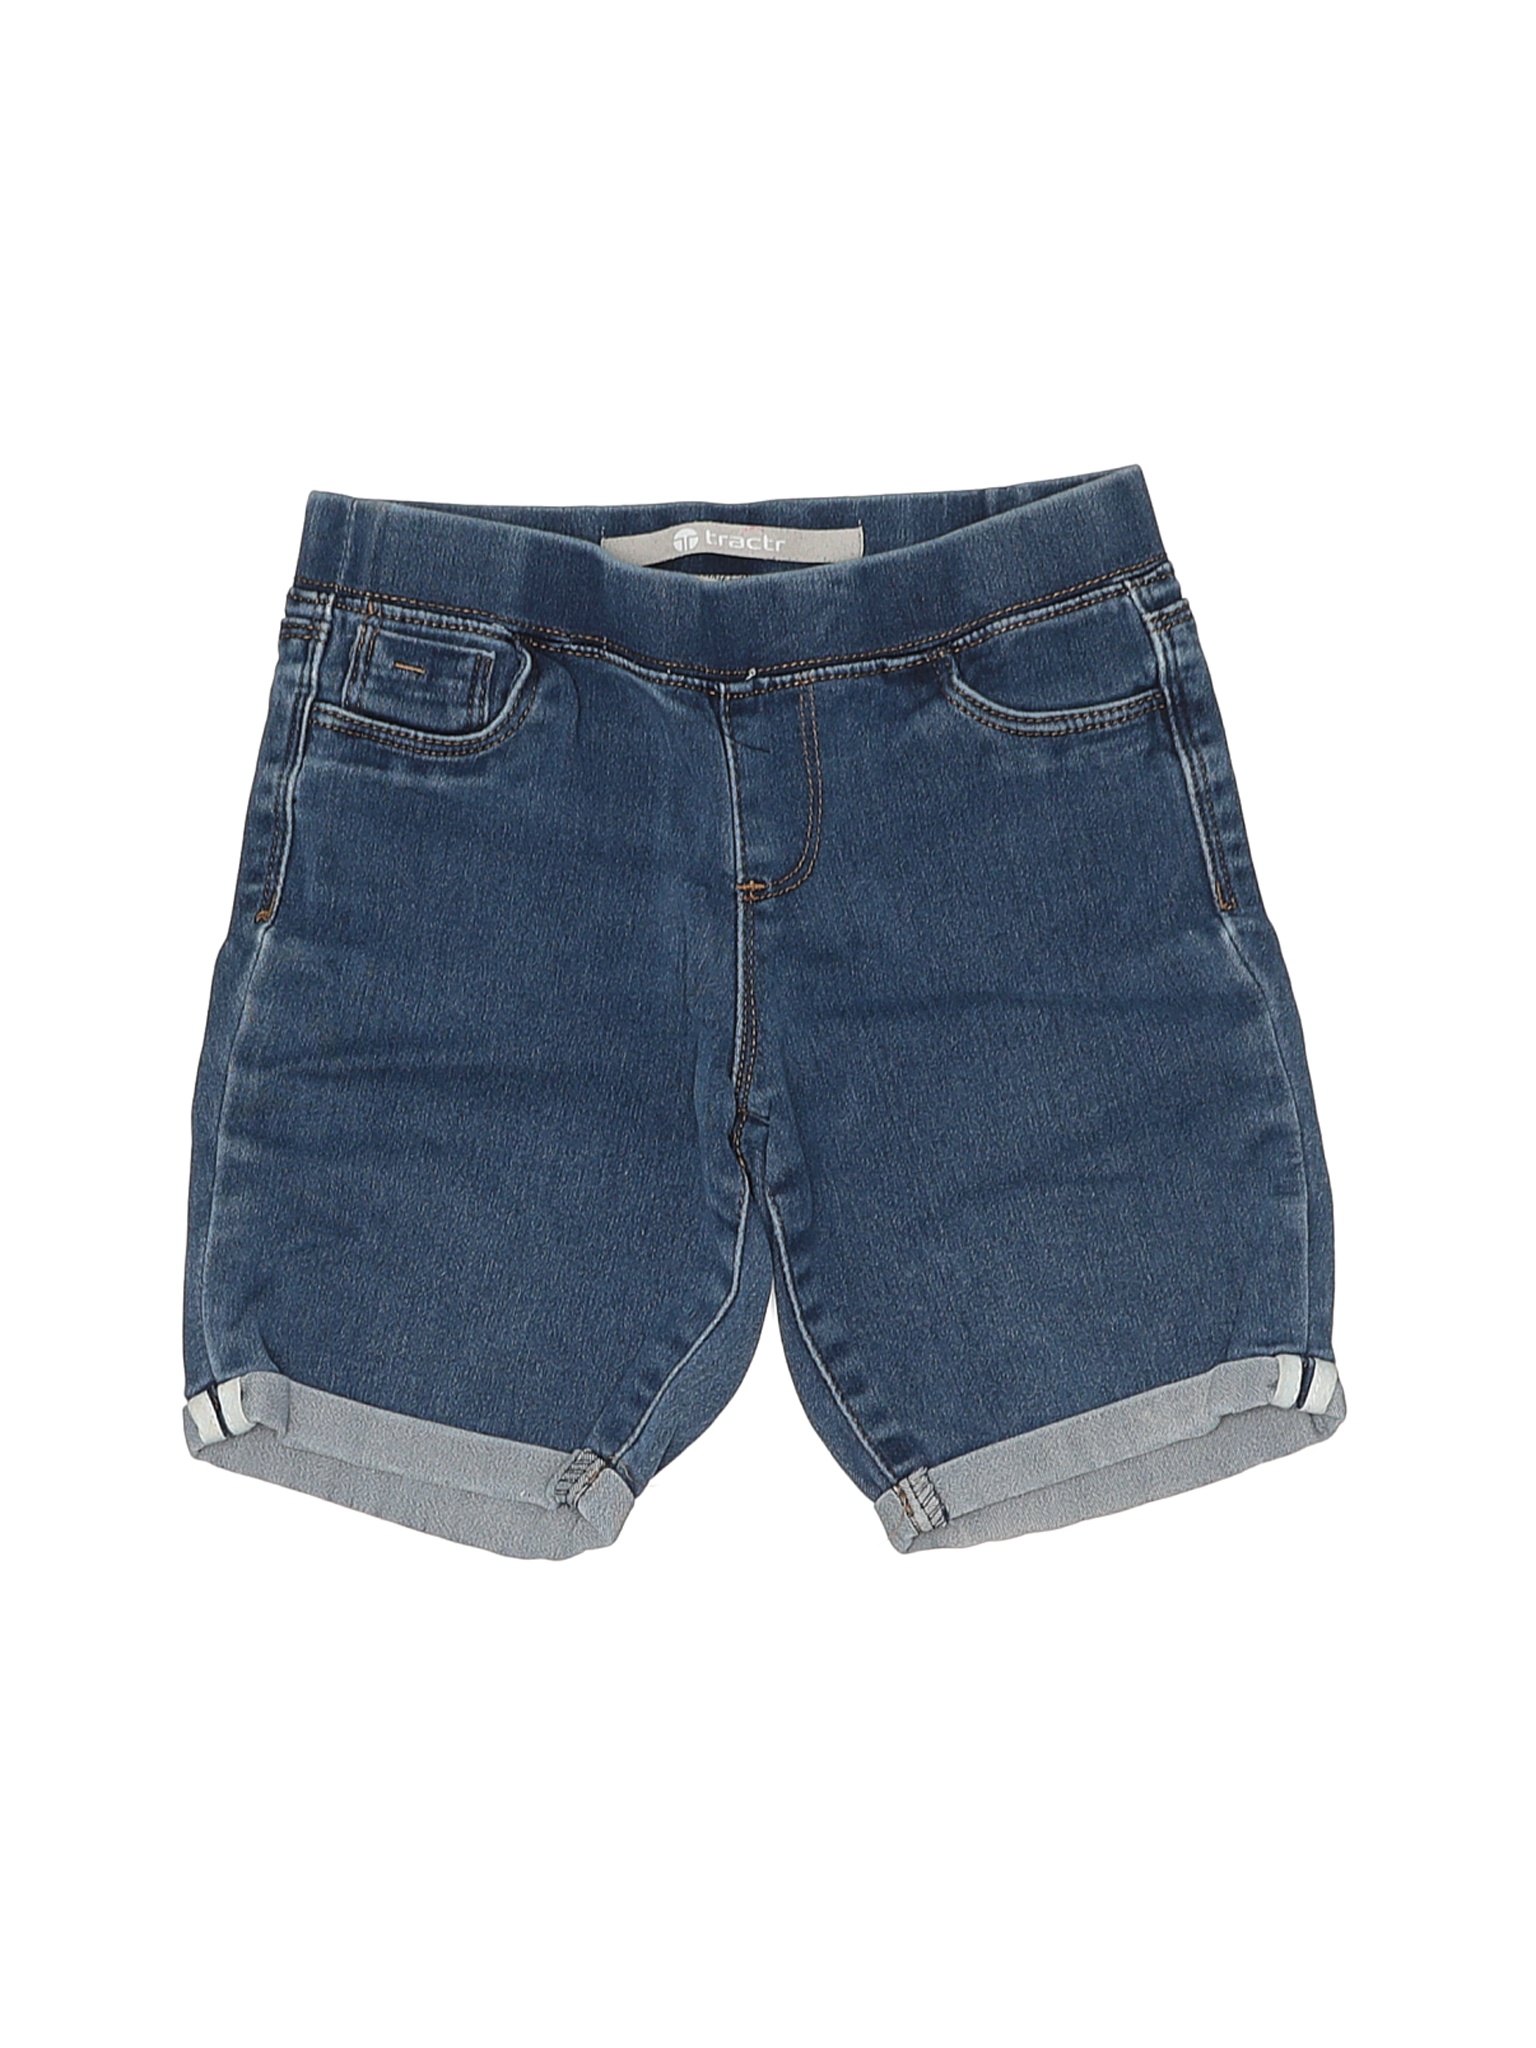 Tractr Girls Blue Denim Shorts 8 Ebay